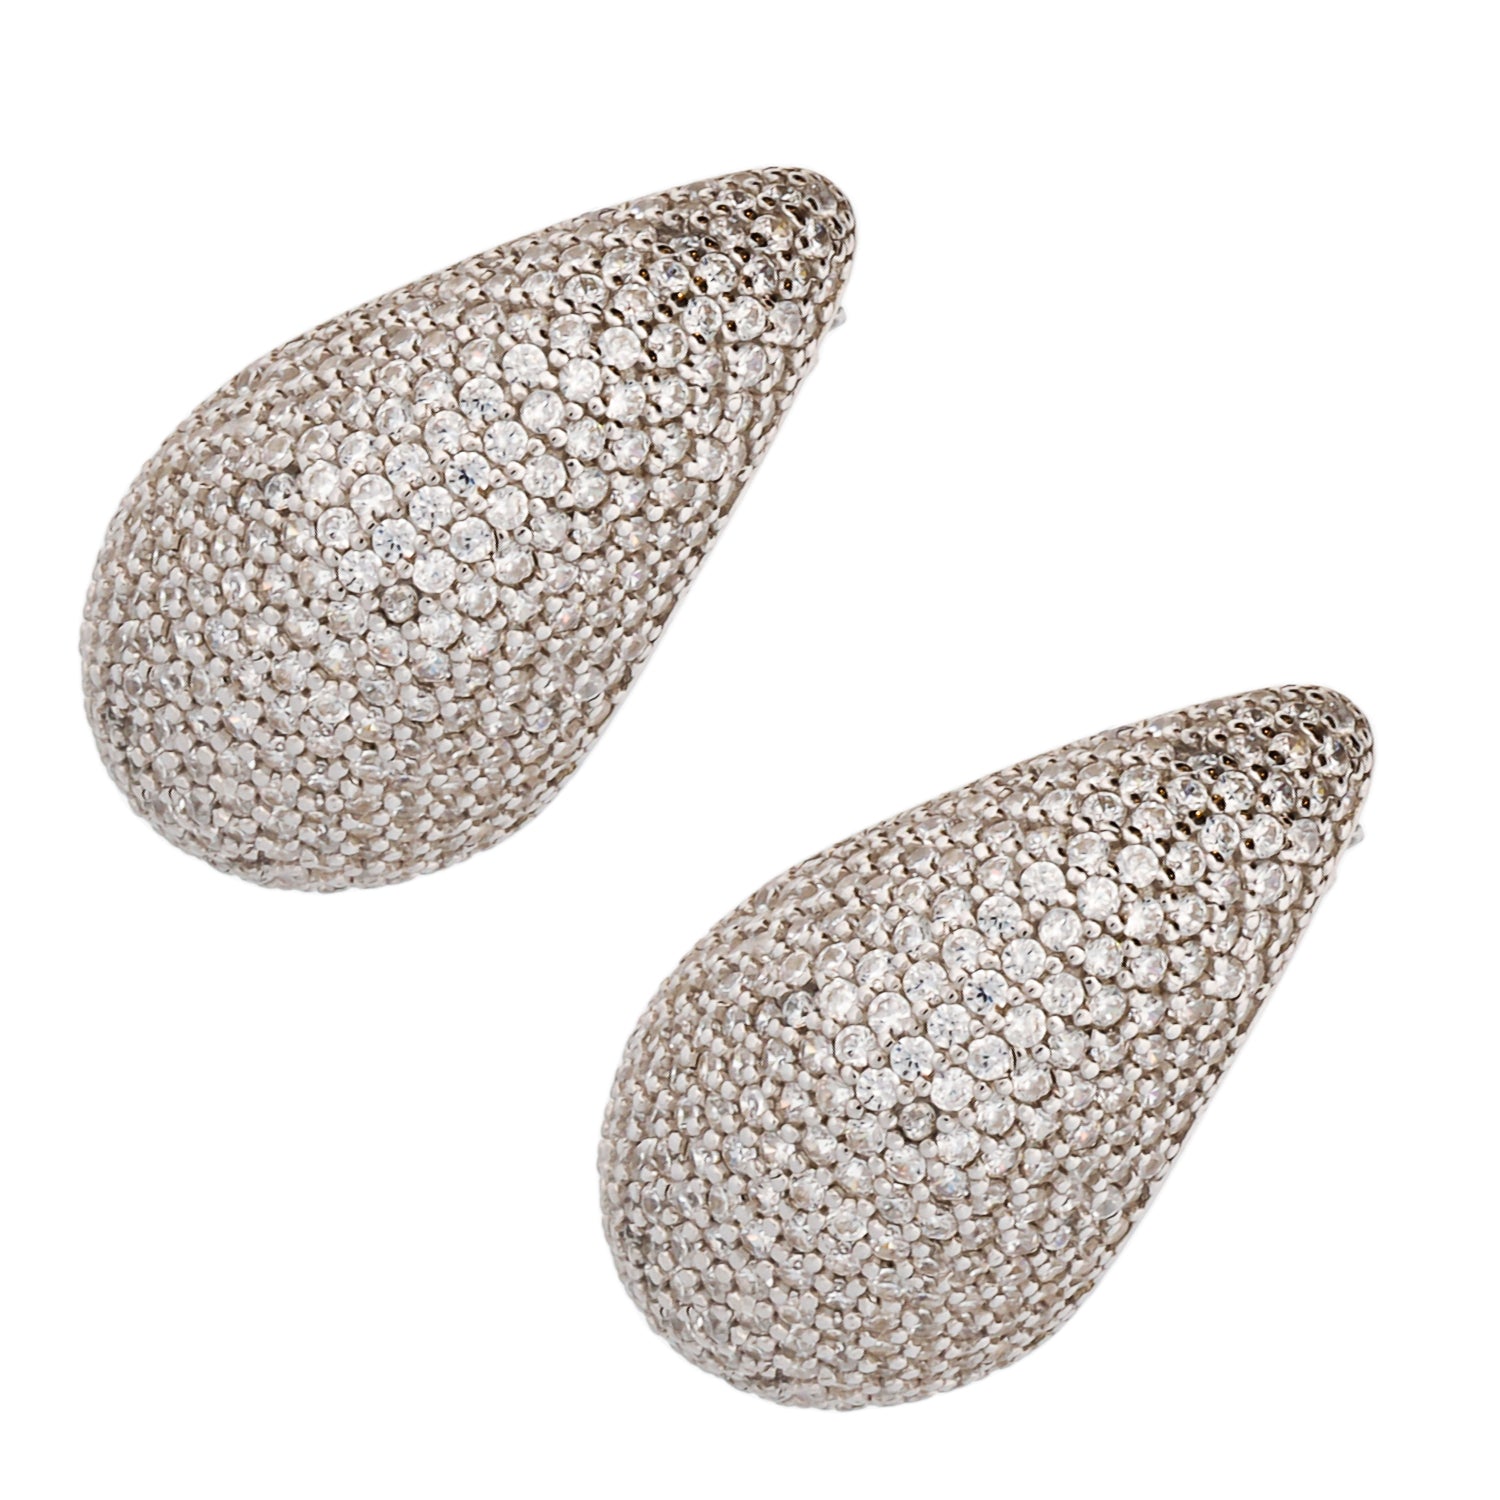 Quality Craftsmanship: Handmade Sterling Silver Drop Earrings